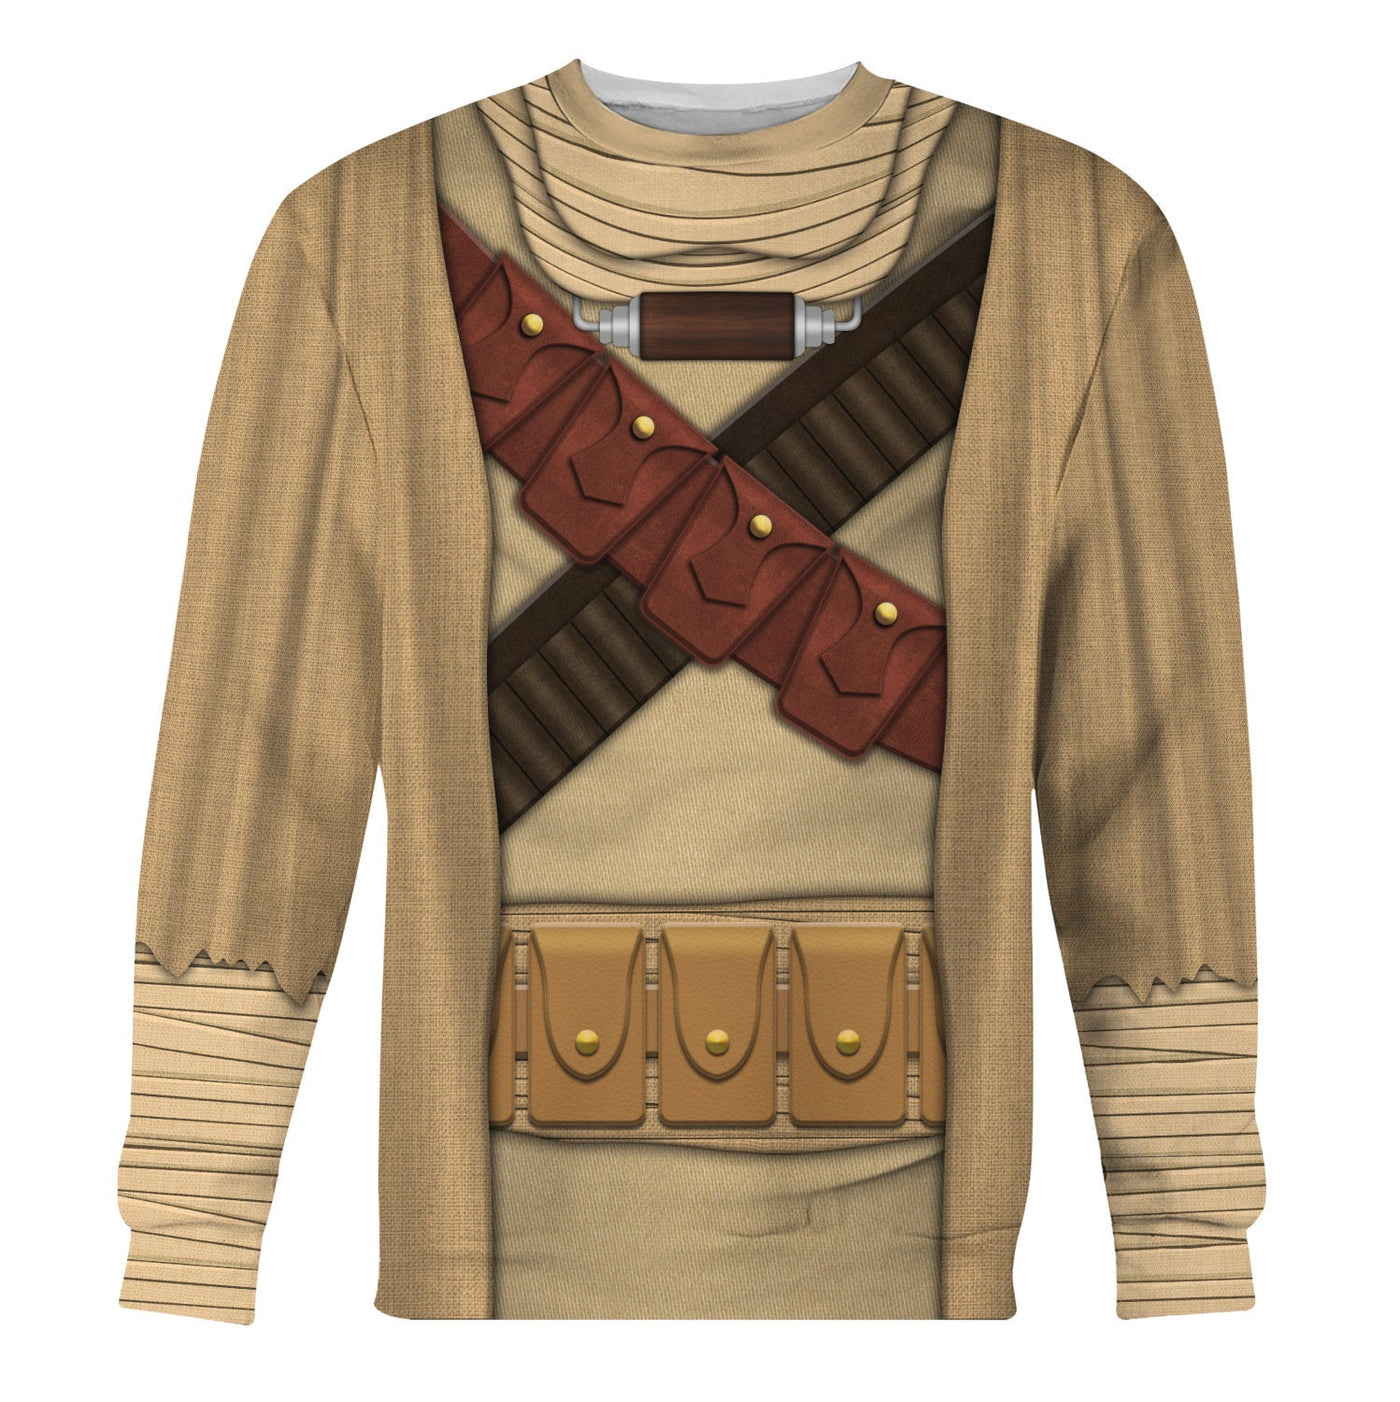 Star Wars Tusken Raiders Costume - Sweater - Ugly Christmas Sweater